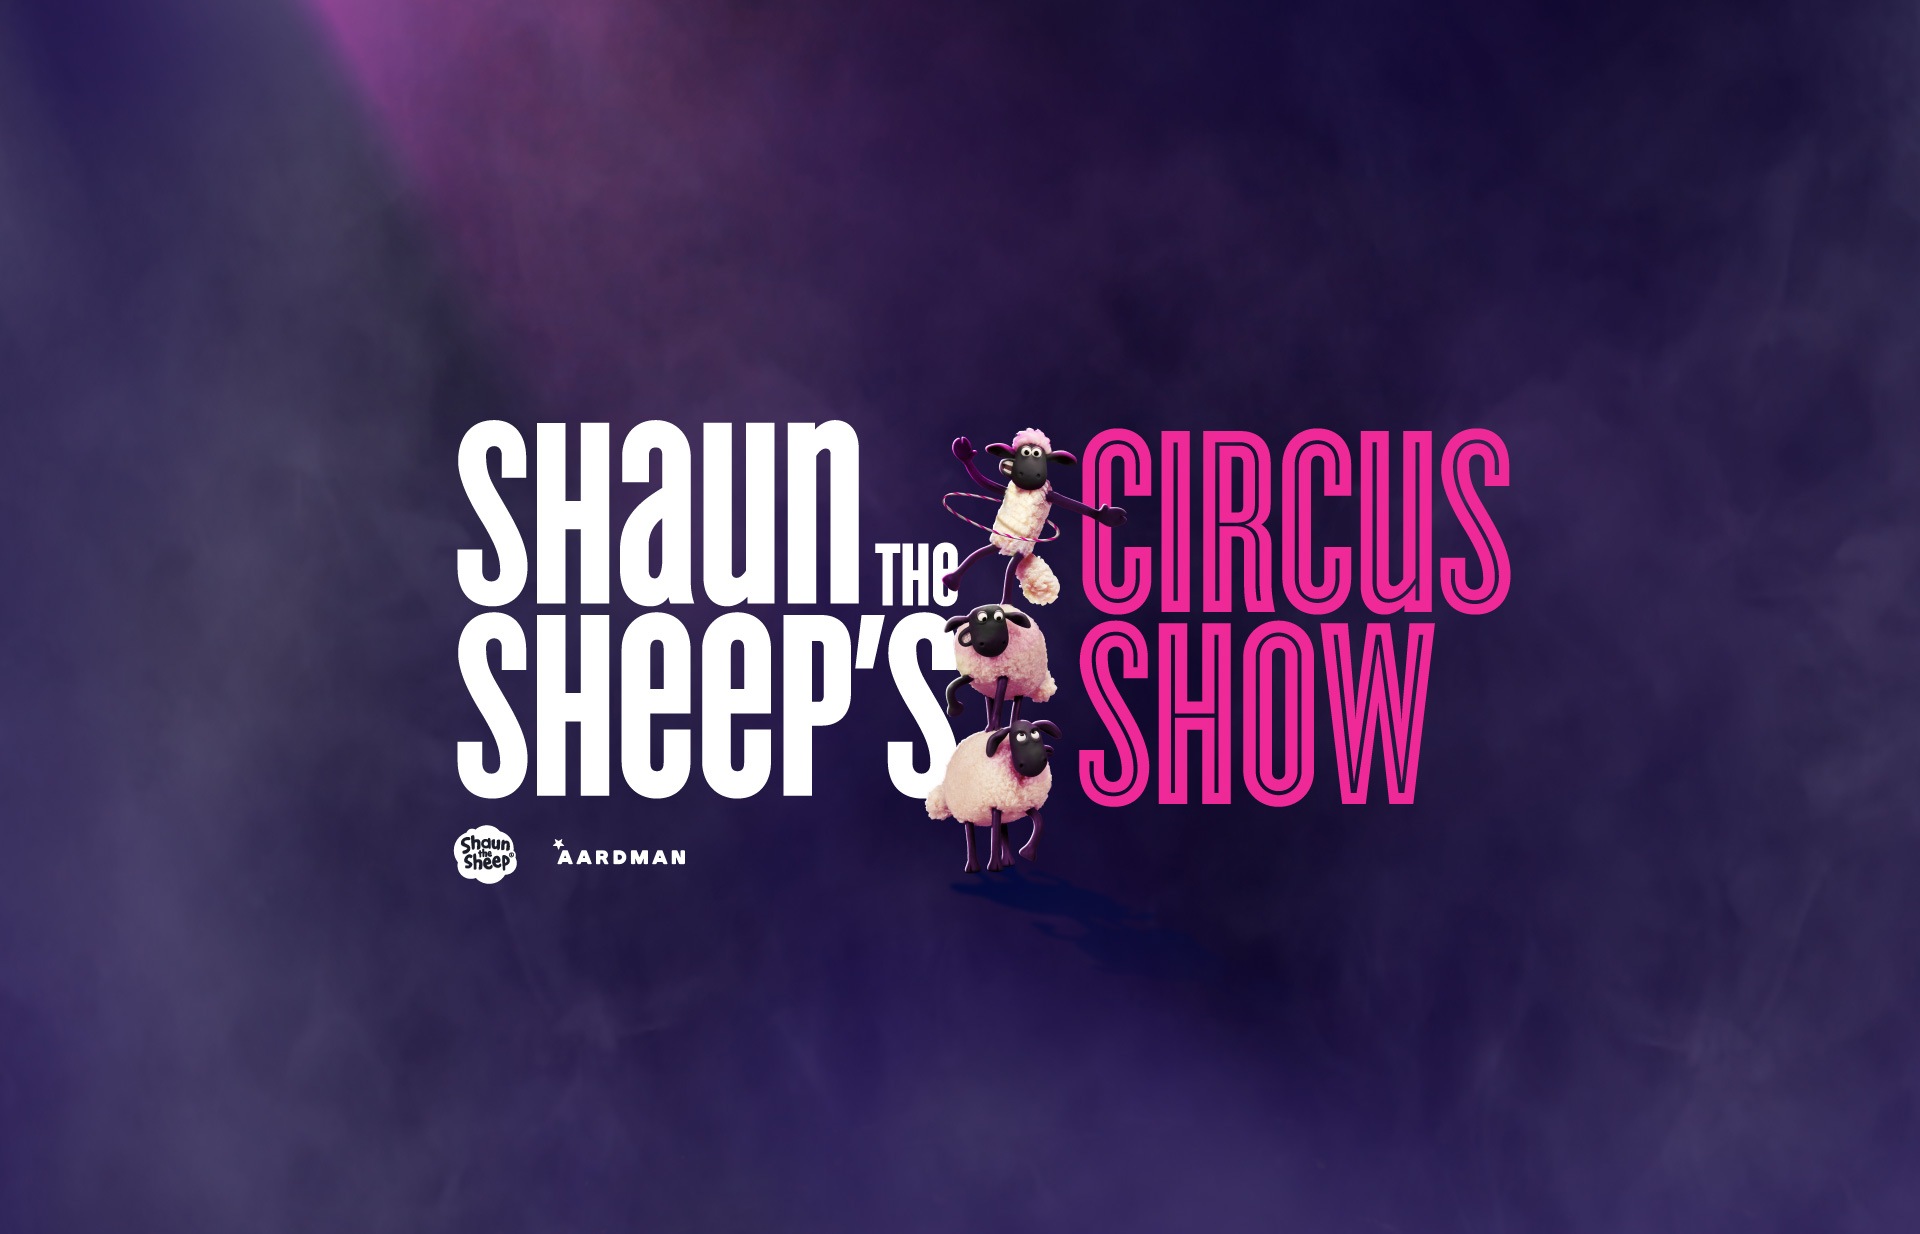 Shaun the Sheep’s Circus Show